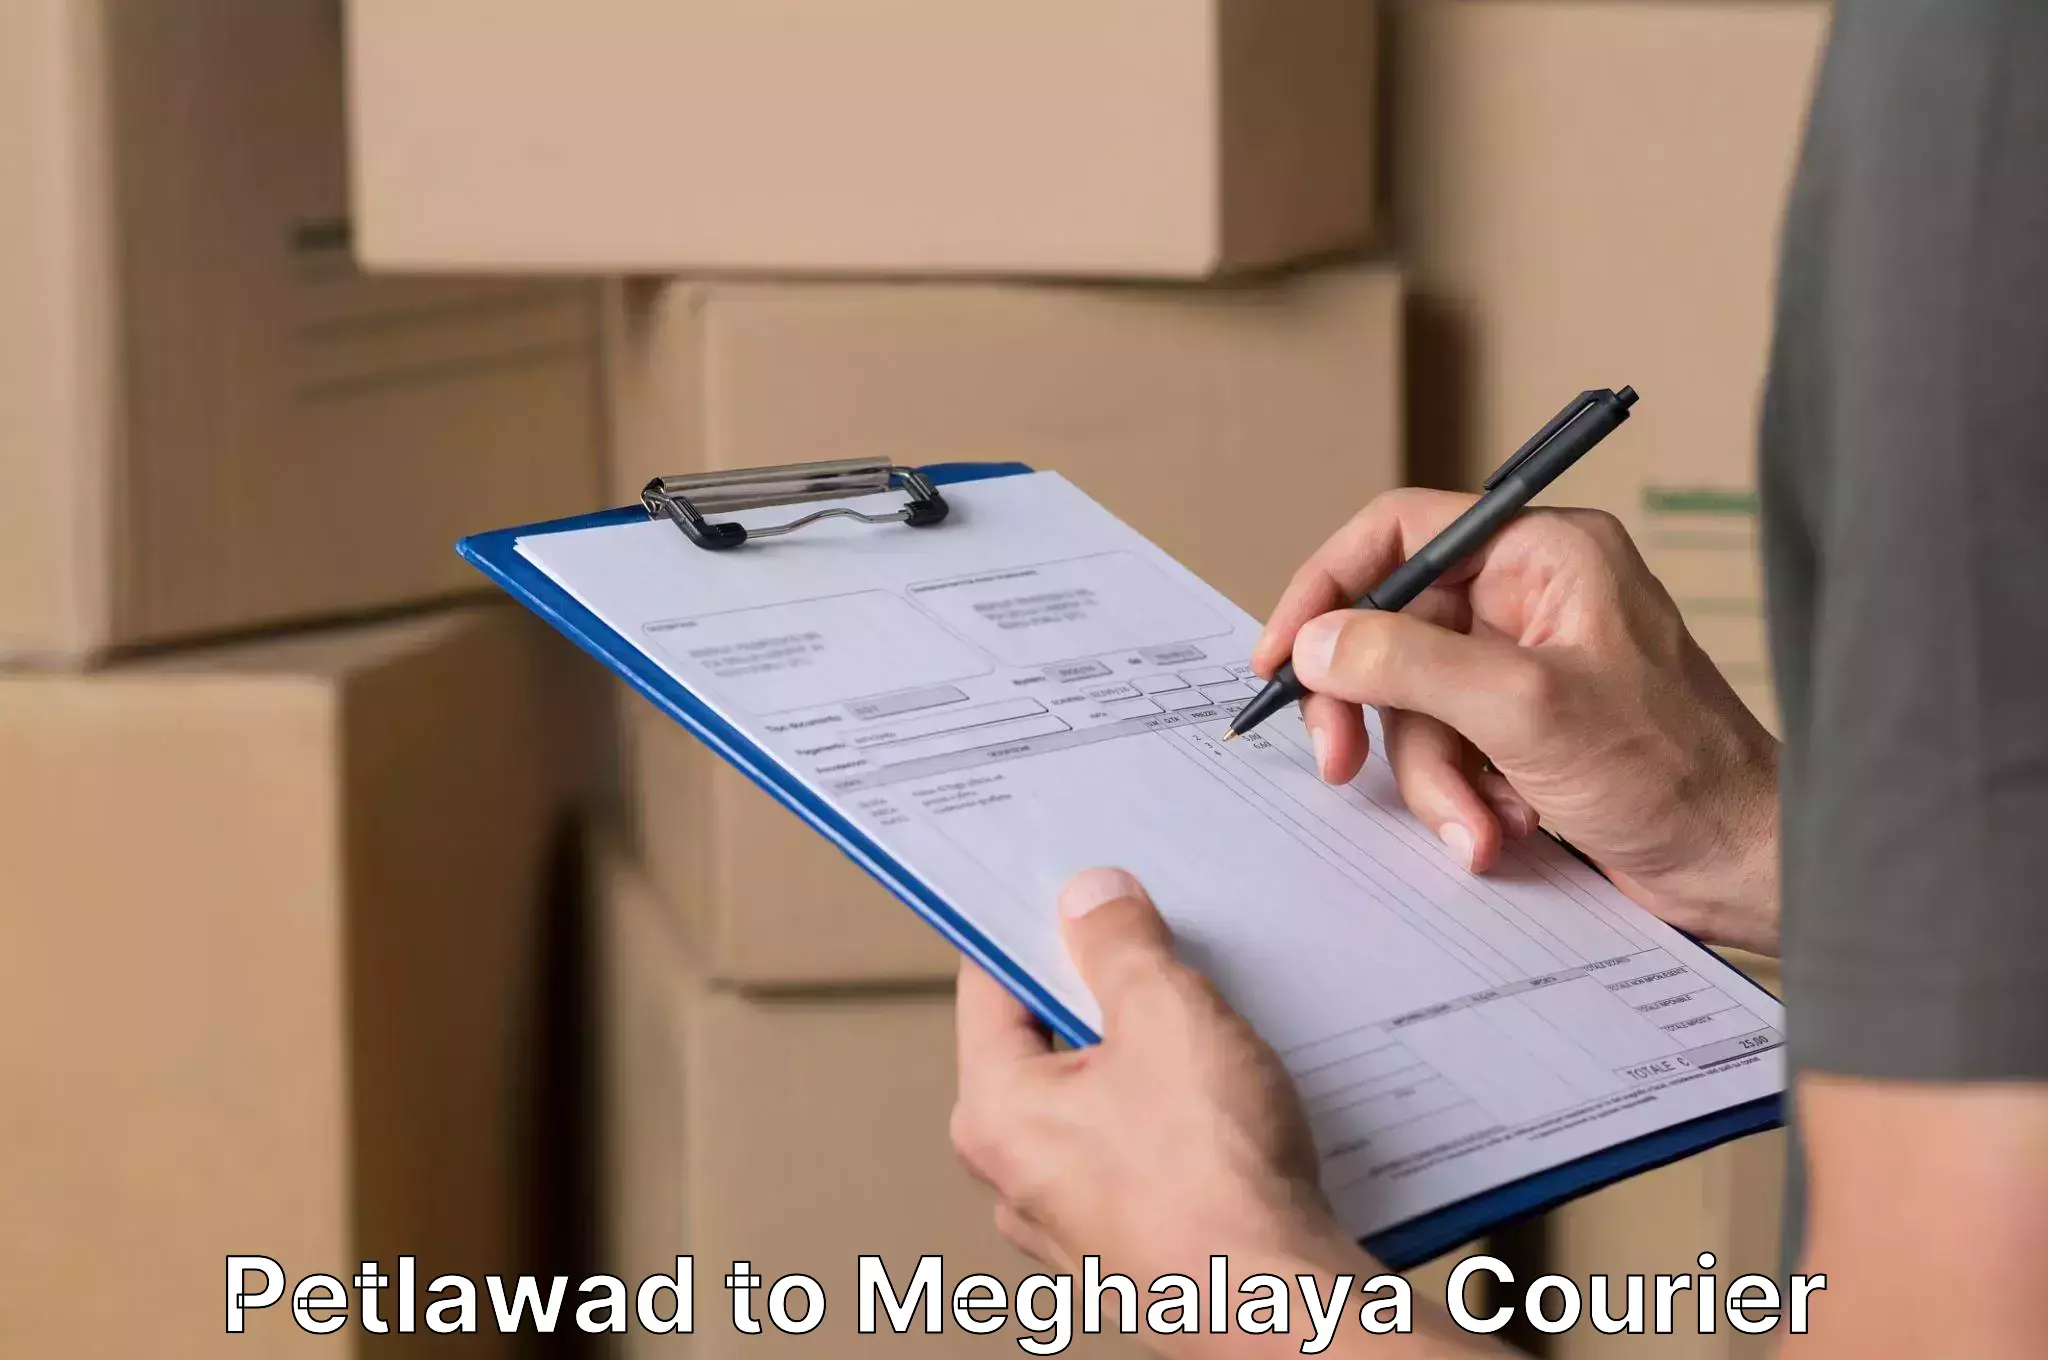 Professional moving company Petlawad to Shillong